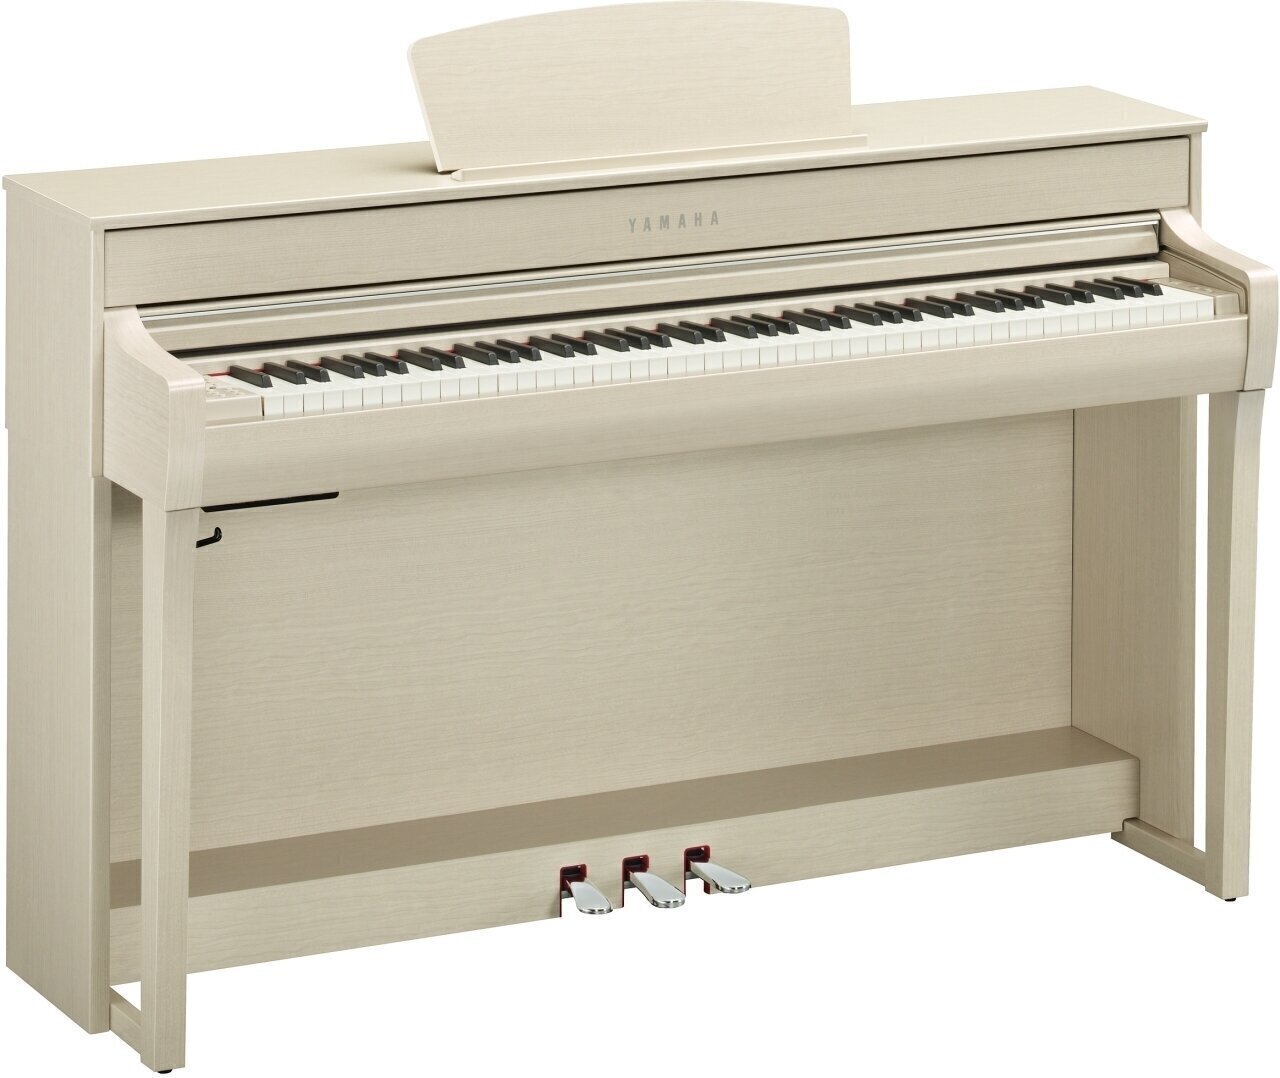 Digital Piano Yamaha CLP 735 White Ash Digital Piano